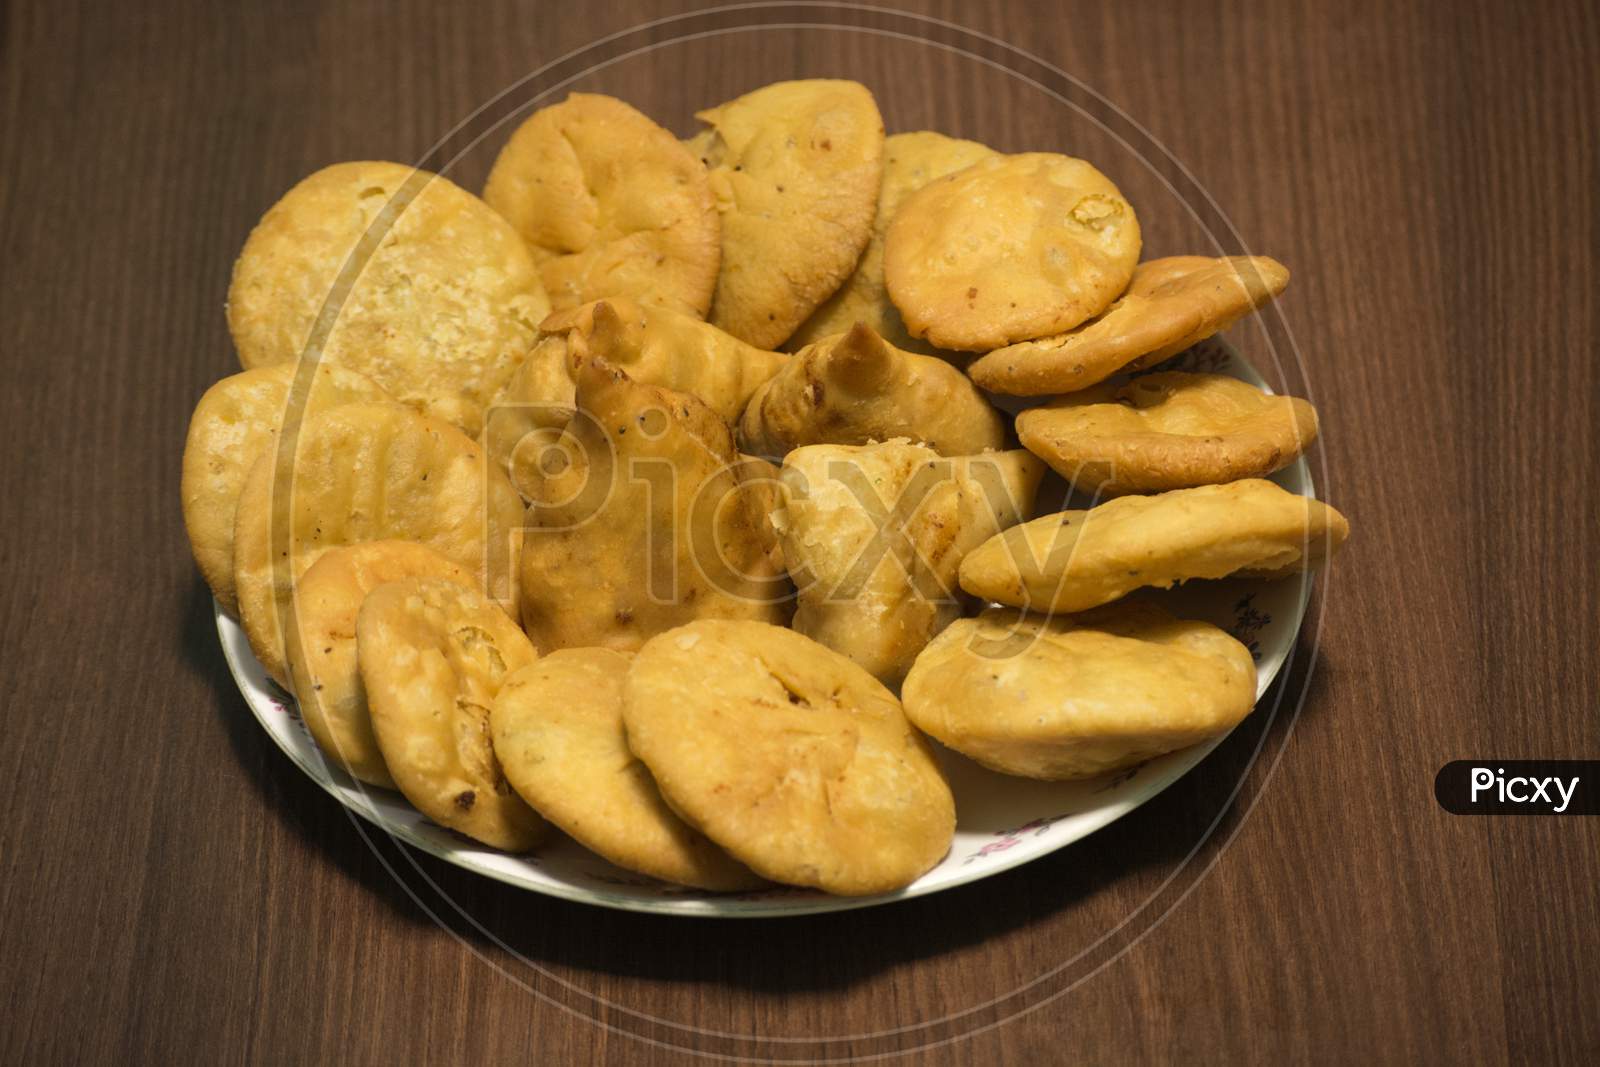 Samosa and matthi (mathari/kachori) Indian dish made of fine wheat flour stuffed with potato mesh served in glass dish with wooden background.